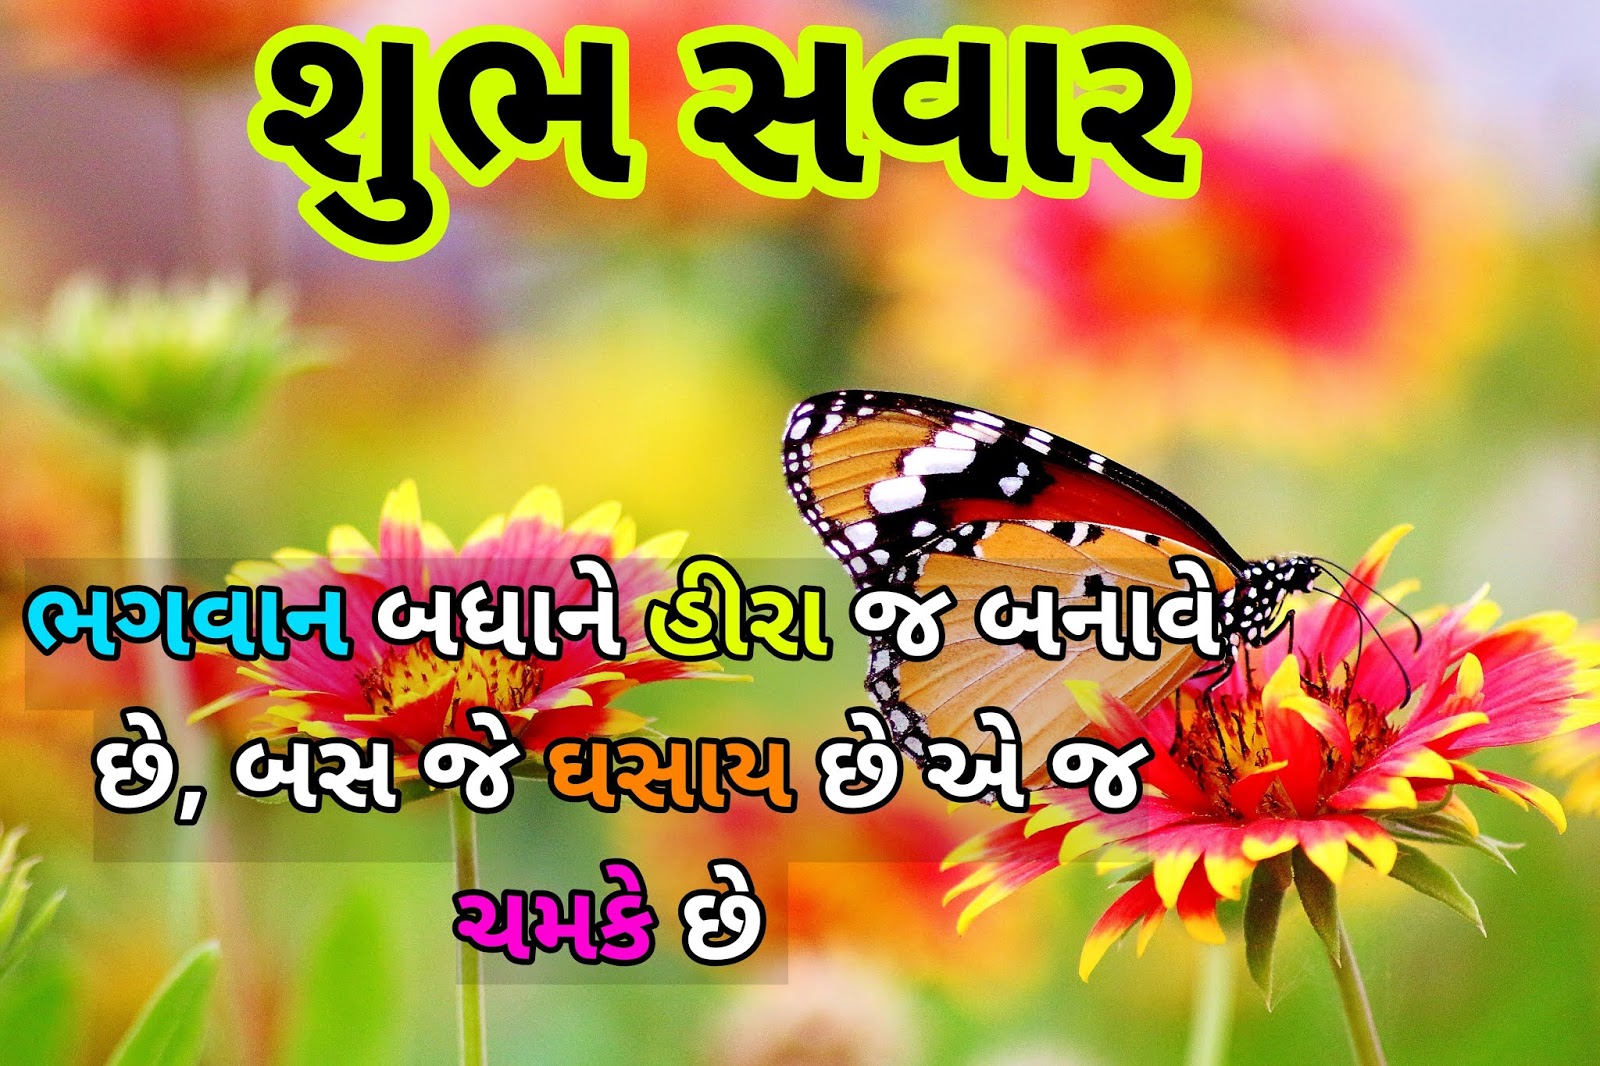 Gujarati Good morning image